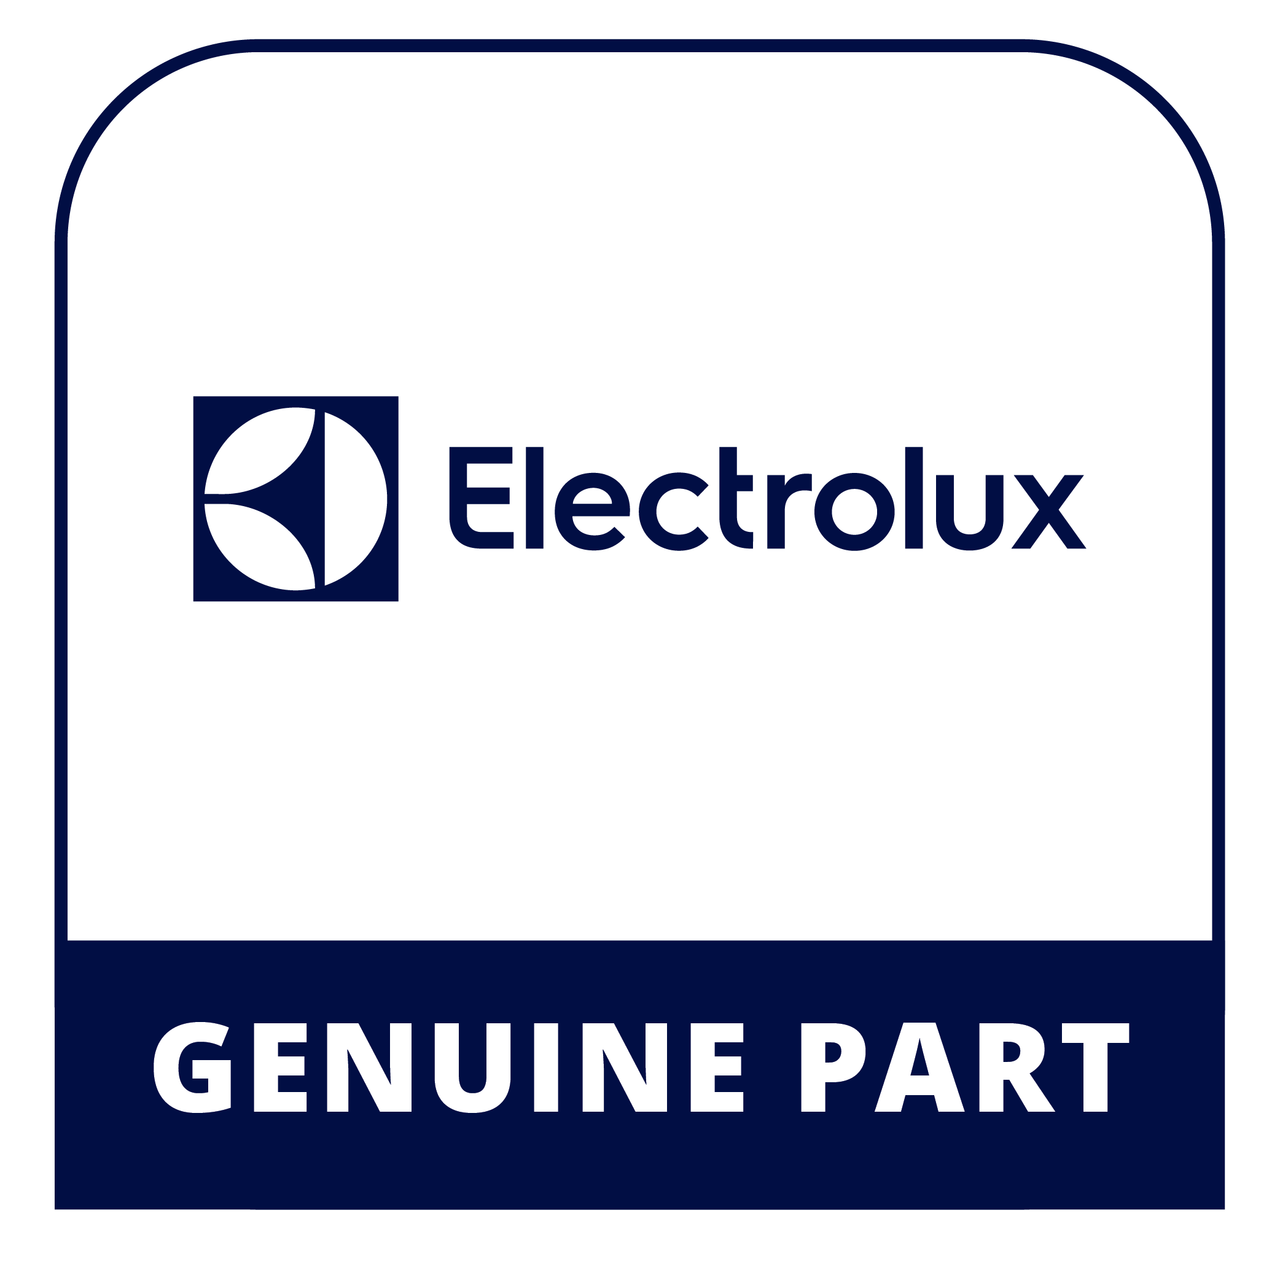 Frigidaire - Electrolux 316655005 Overlay - Genuine Electrolux Part